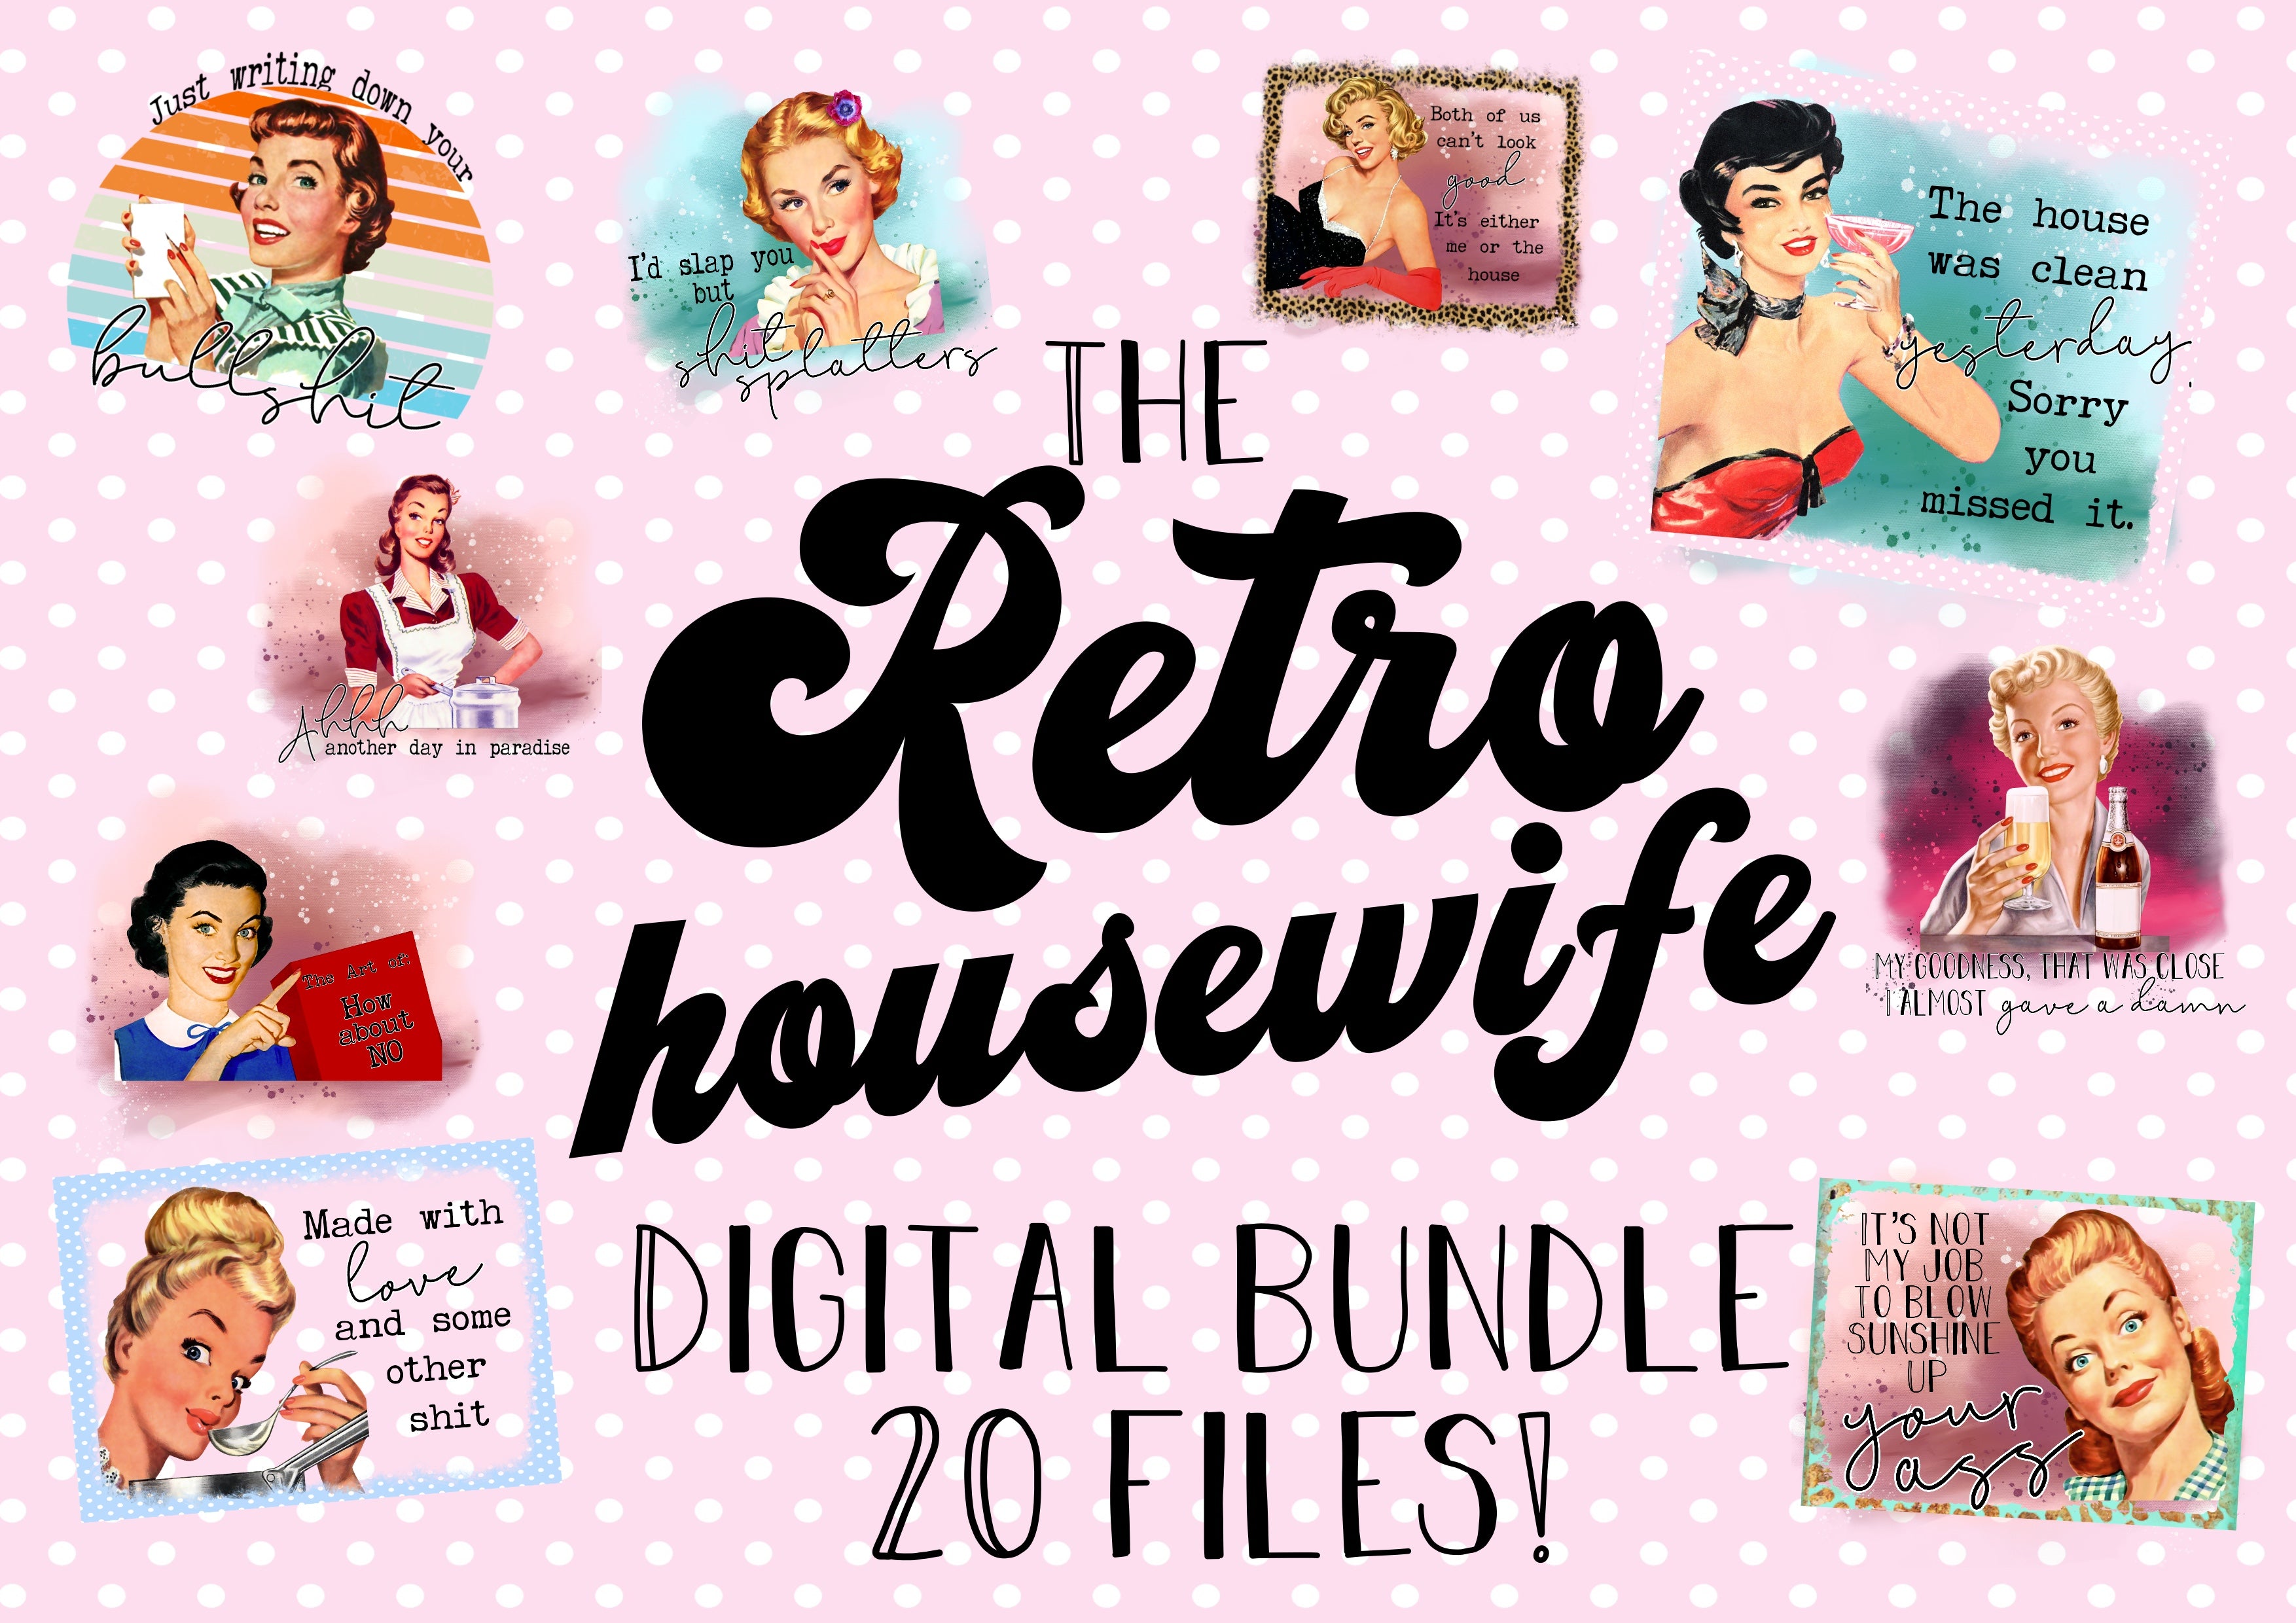 The Retro housewife DIGITAL BUNDLE (20 files)